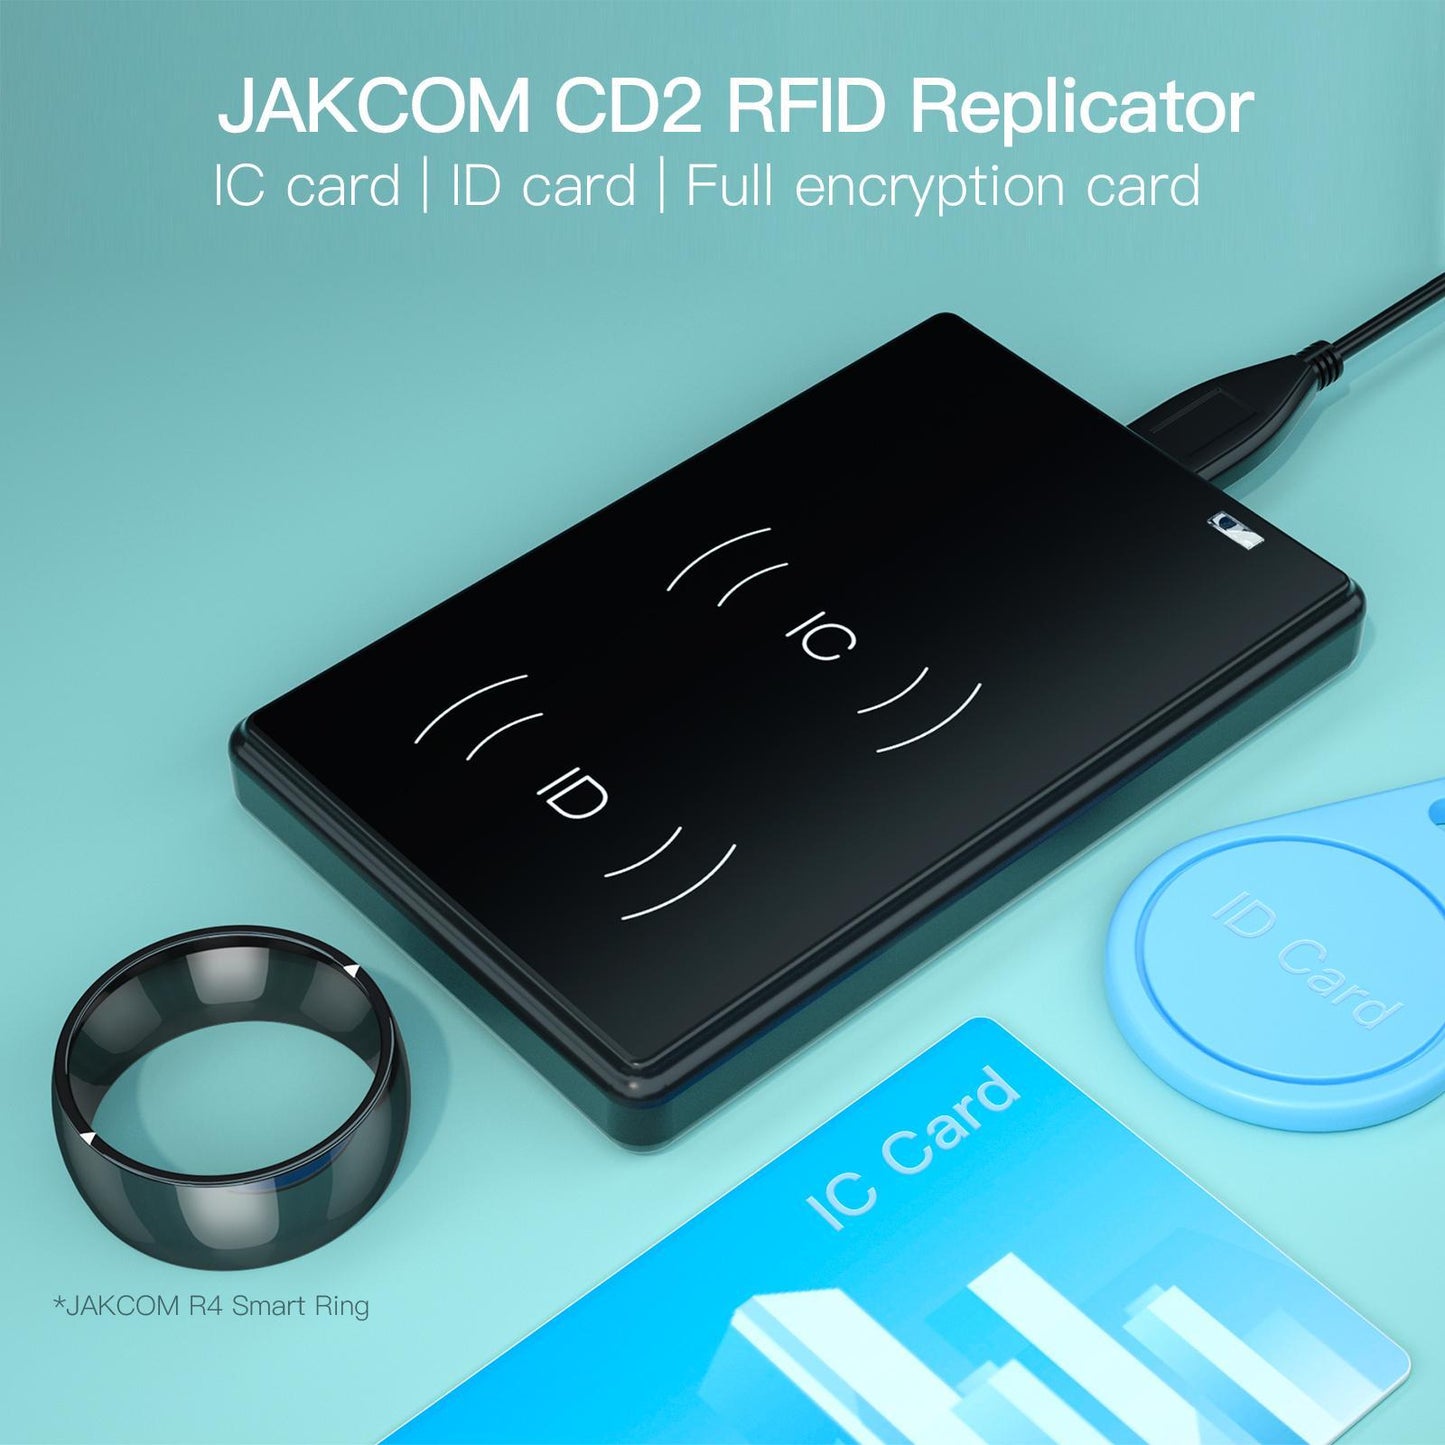 JAKCOM CD2 RFID Replicator For R4 Smart Ring